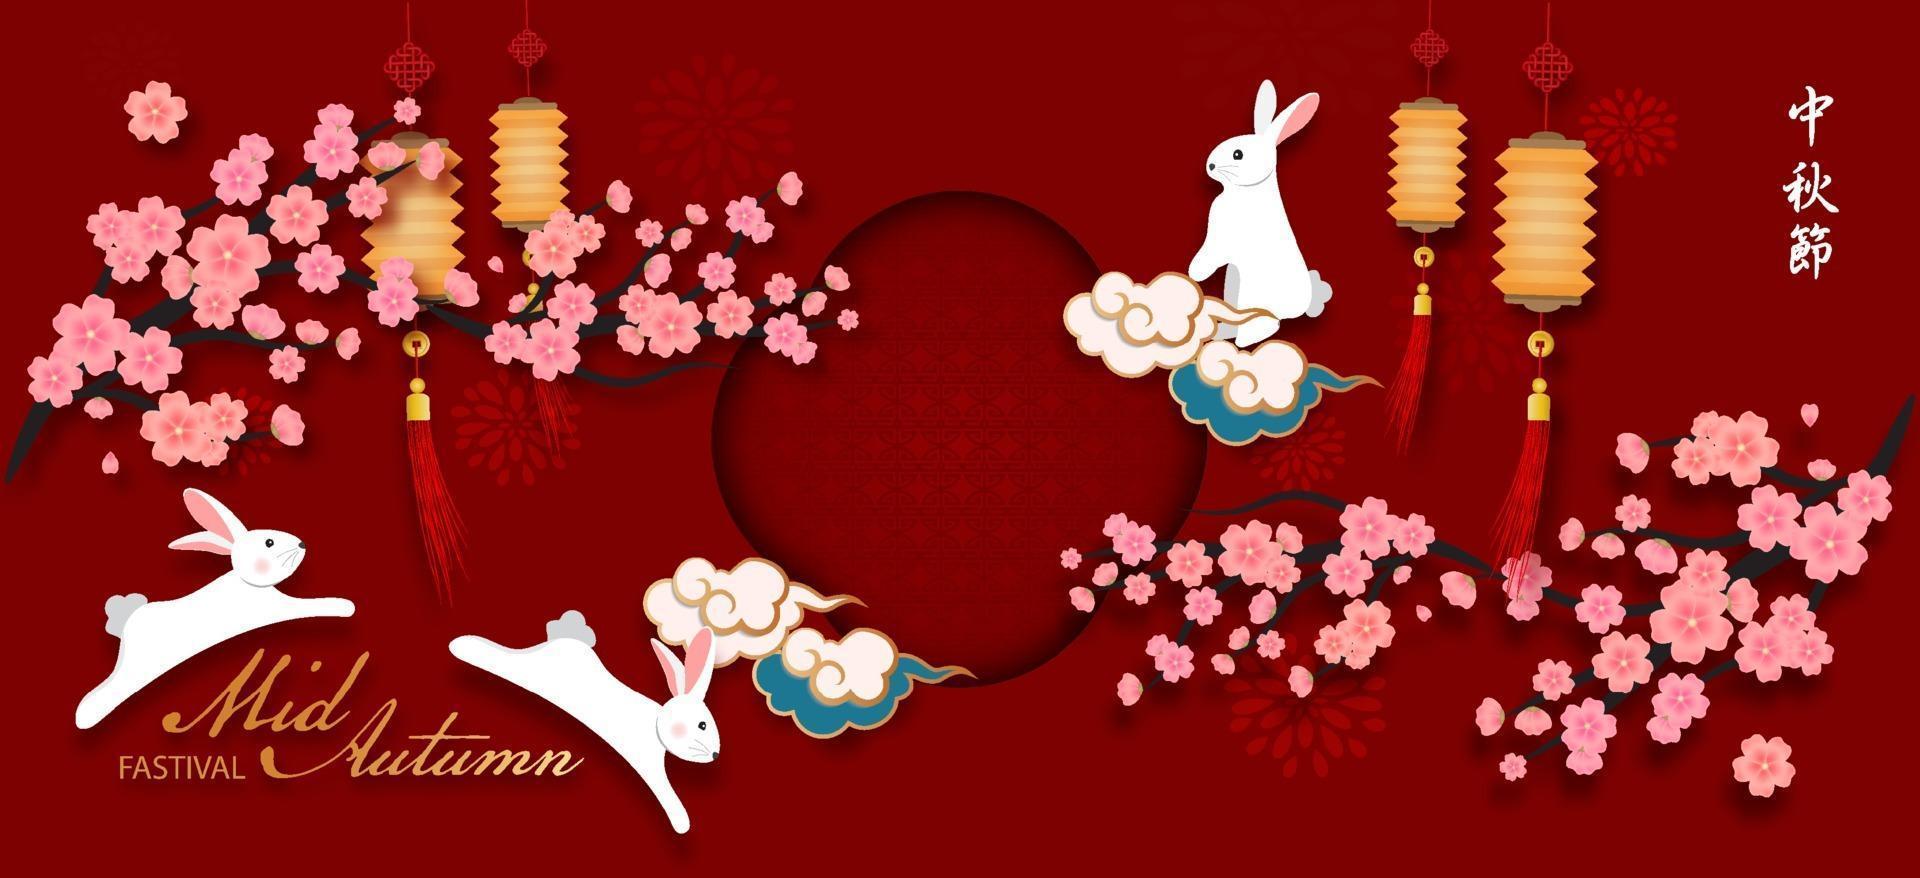 banner kaninen hälsning glad kinesisk midhöstfestival. vektor